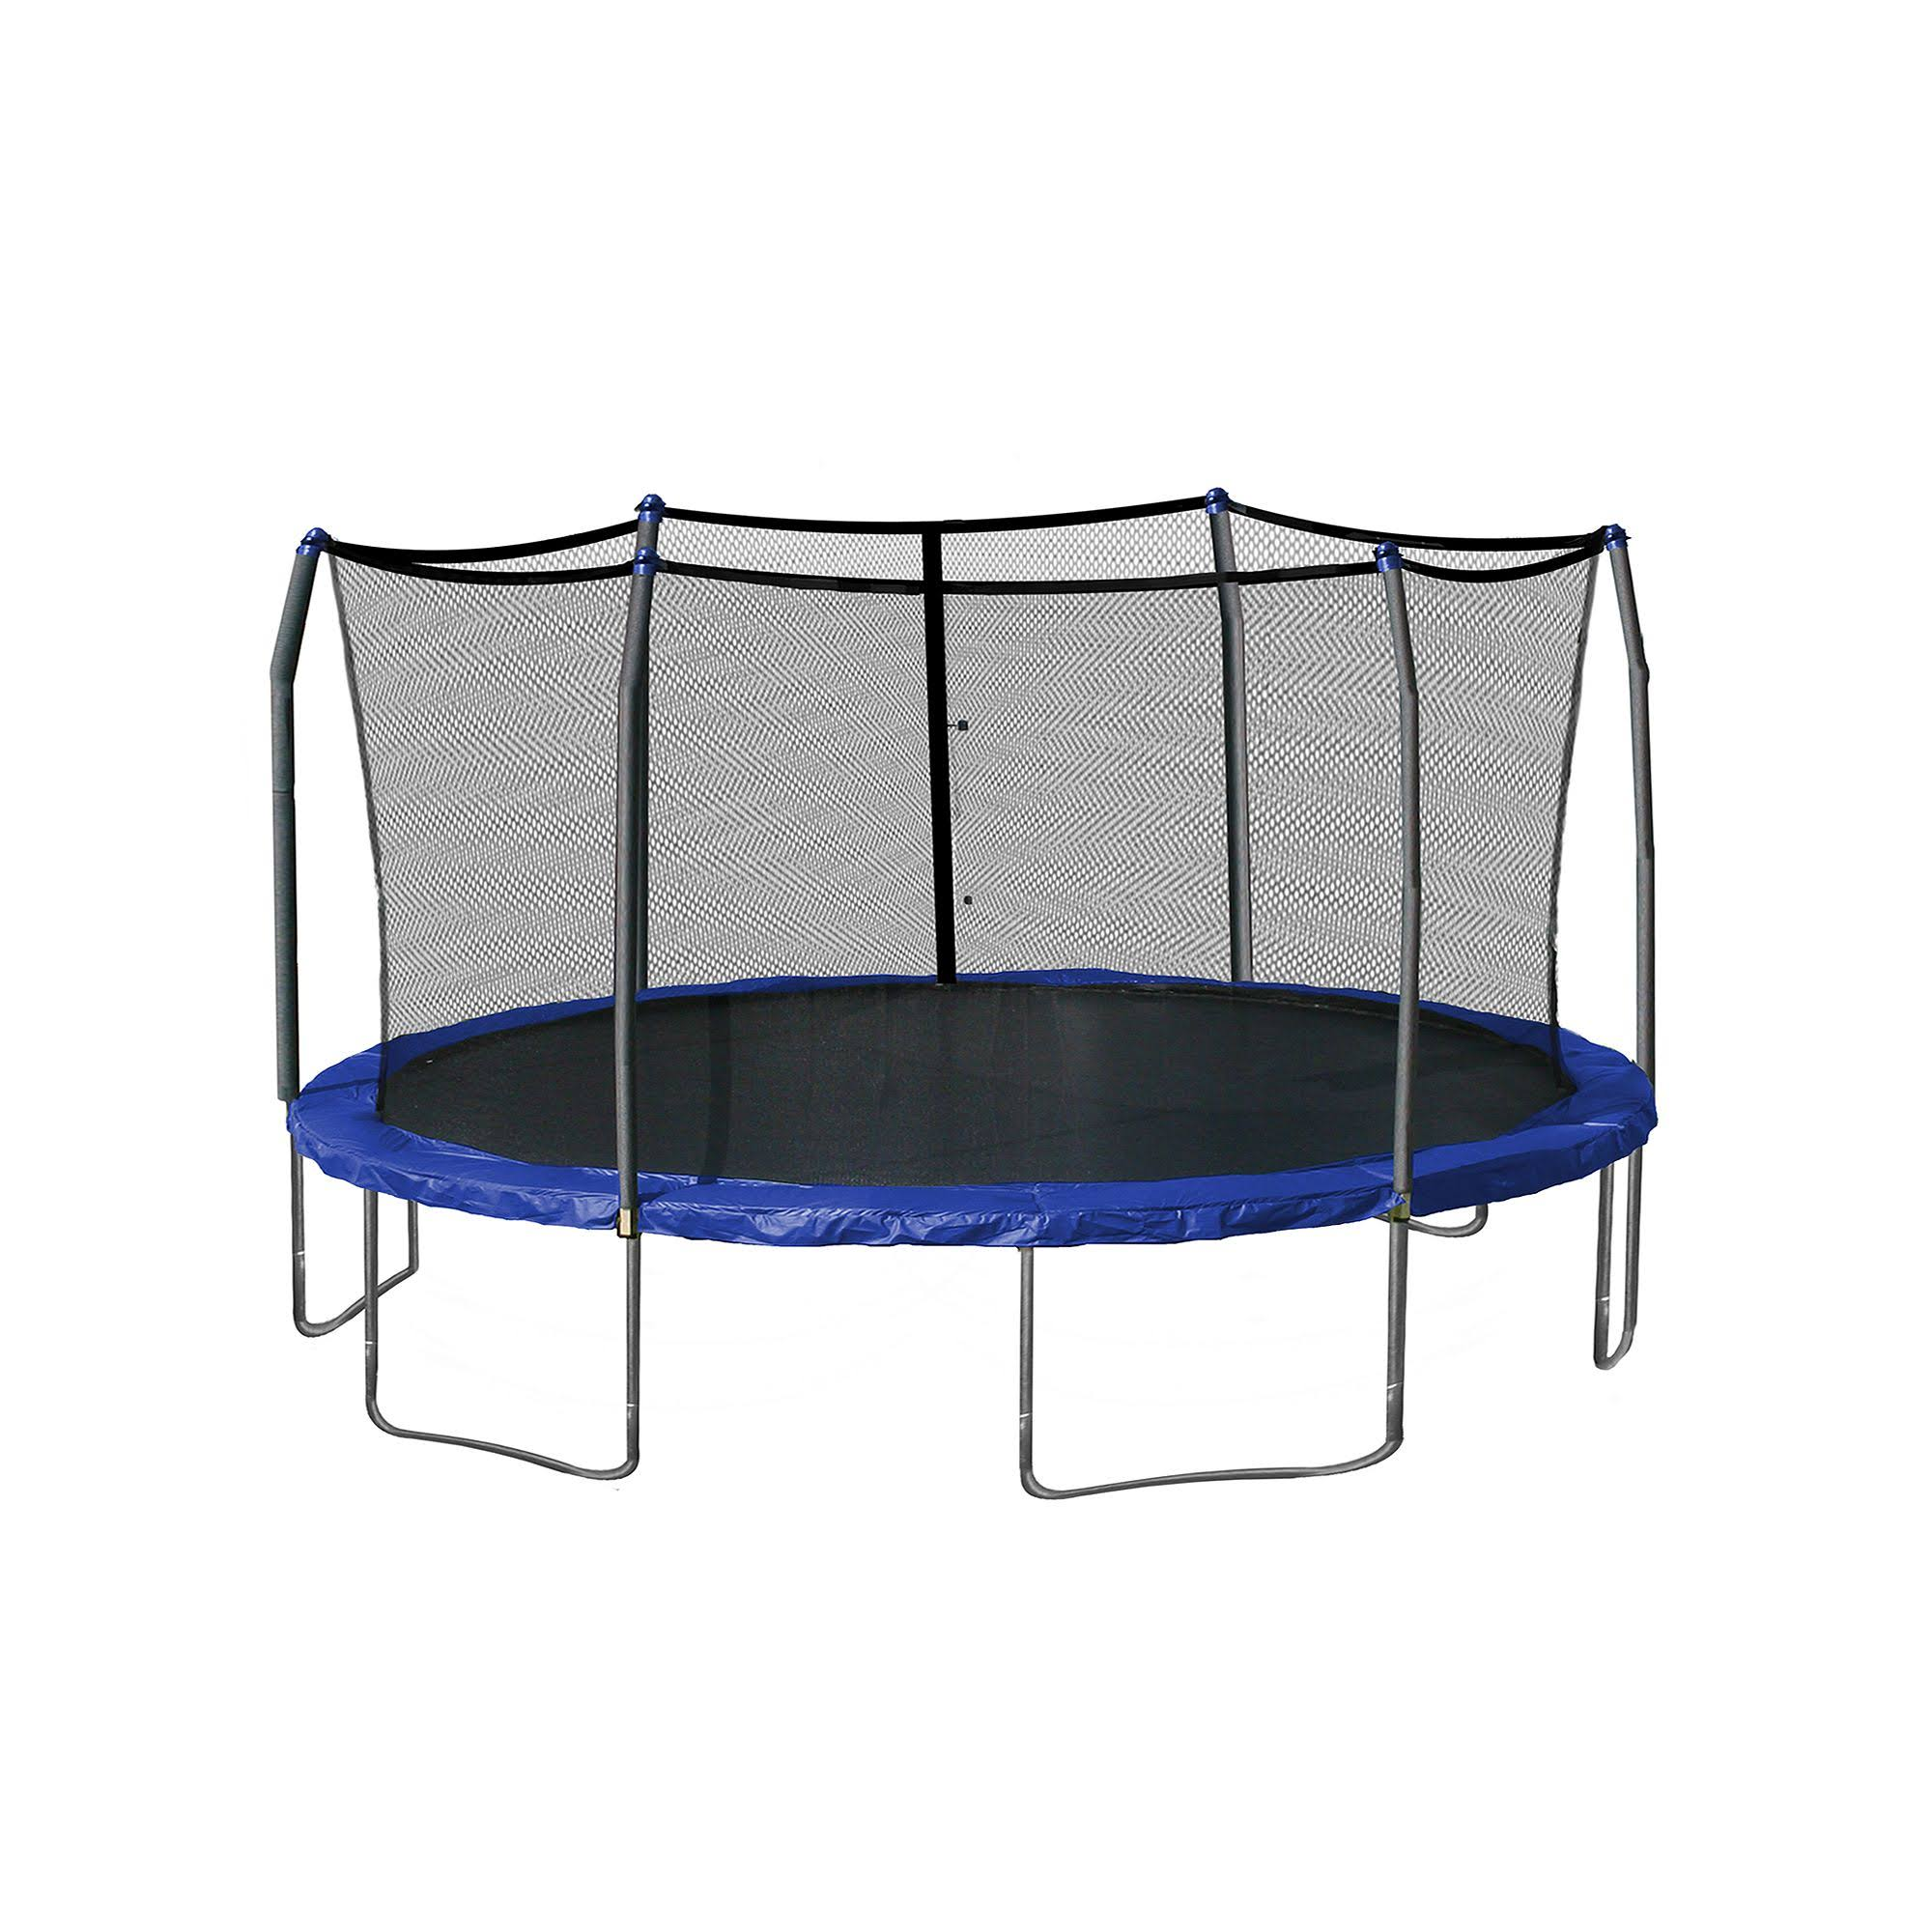 Skywalker 17′ Oval Trampoline with Safety Enclosure Blue